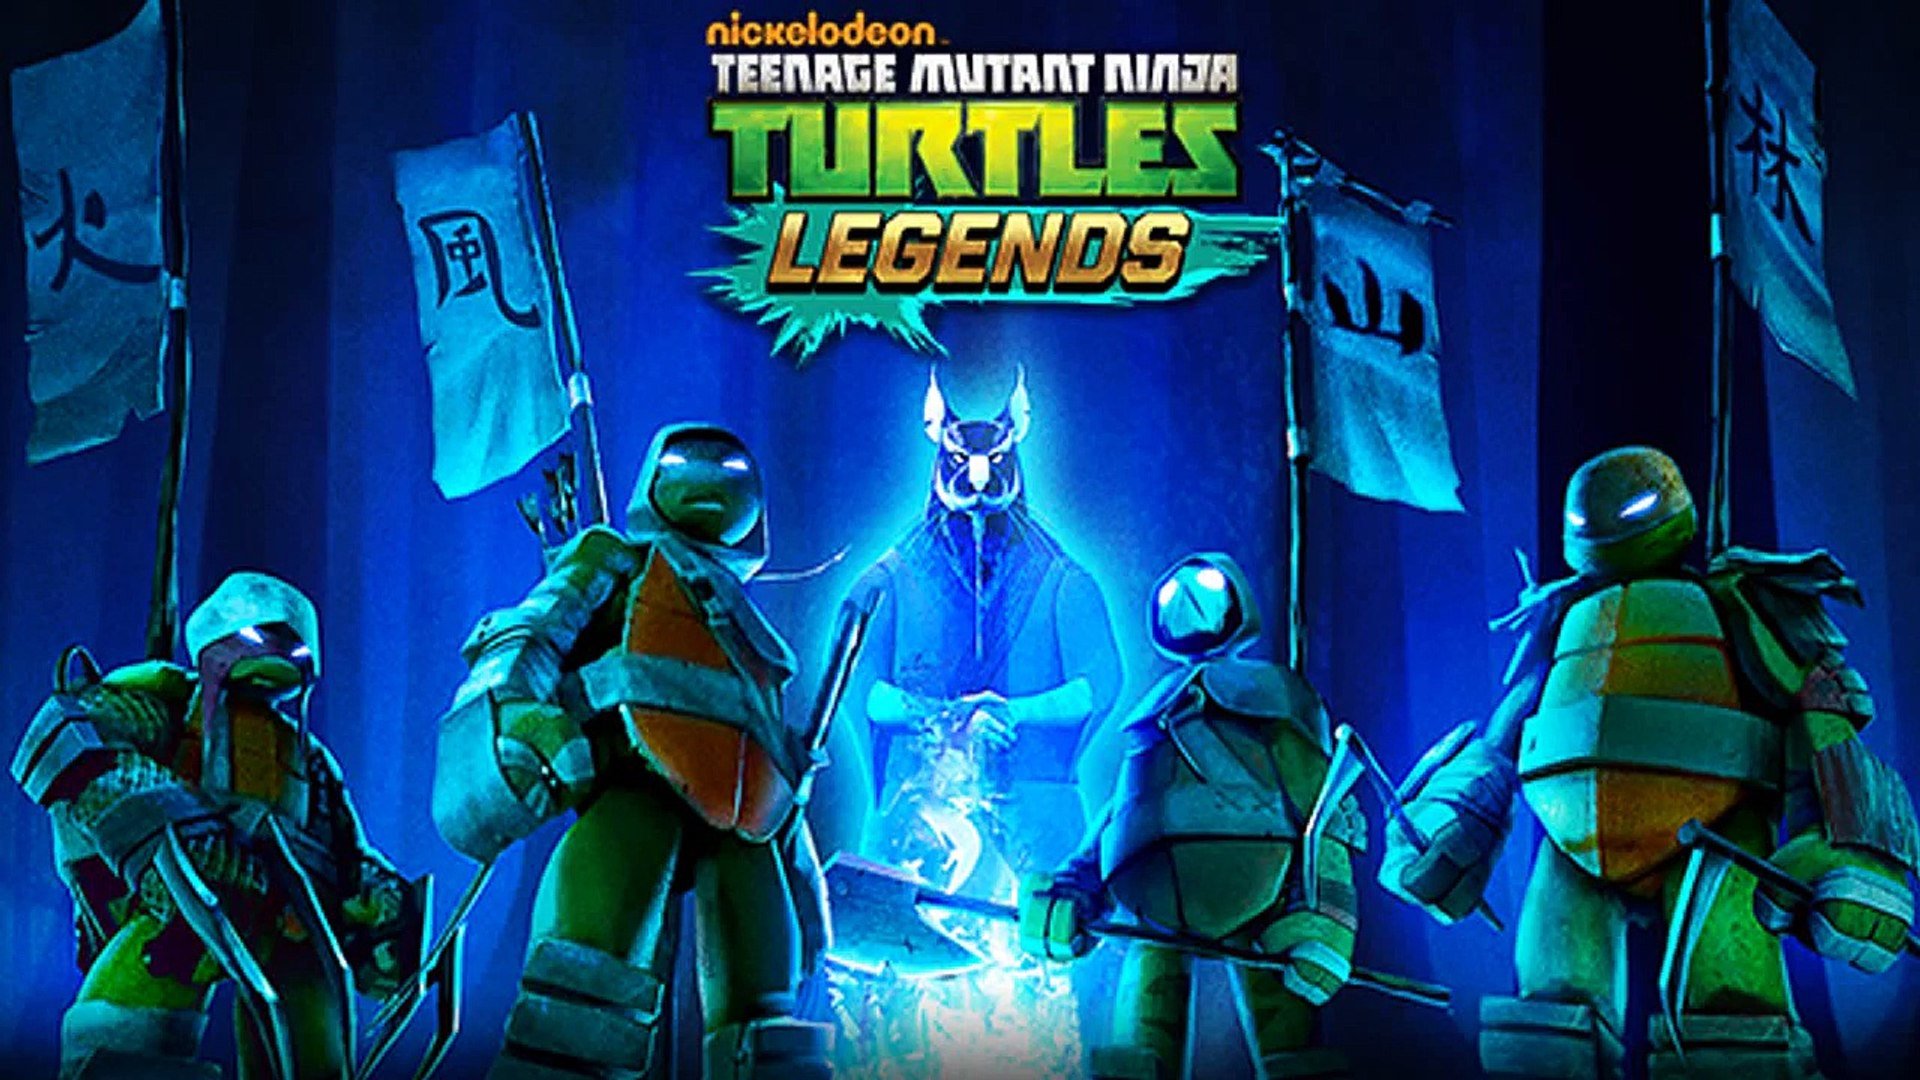 Черепашки ниндзя легенды на компьютере. Teenage Mutant Ninja Turtles Legends. Teenage Mutant Ninja Turtles Legends 2016. Черепашки ниндзя Туртлес легенд. Черепашки ниндзя видение.